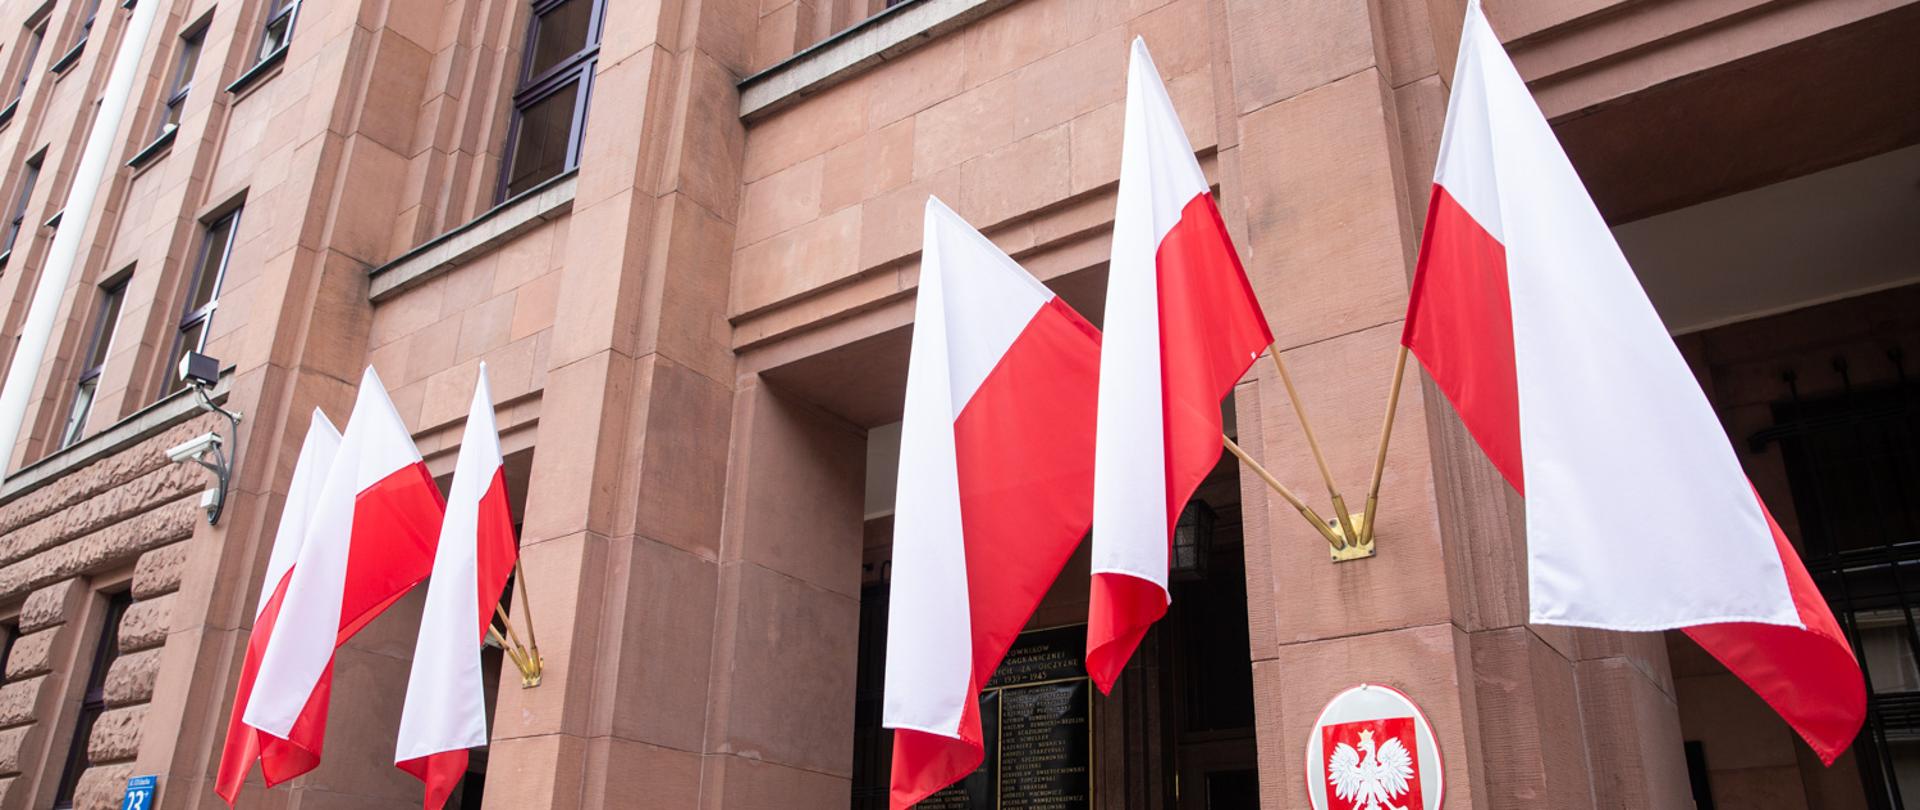 The MFA main entrance in Warsaw